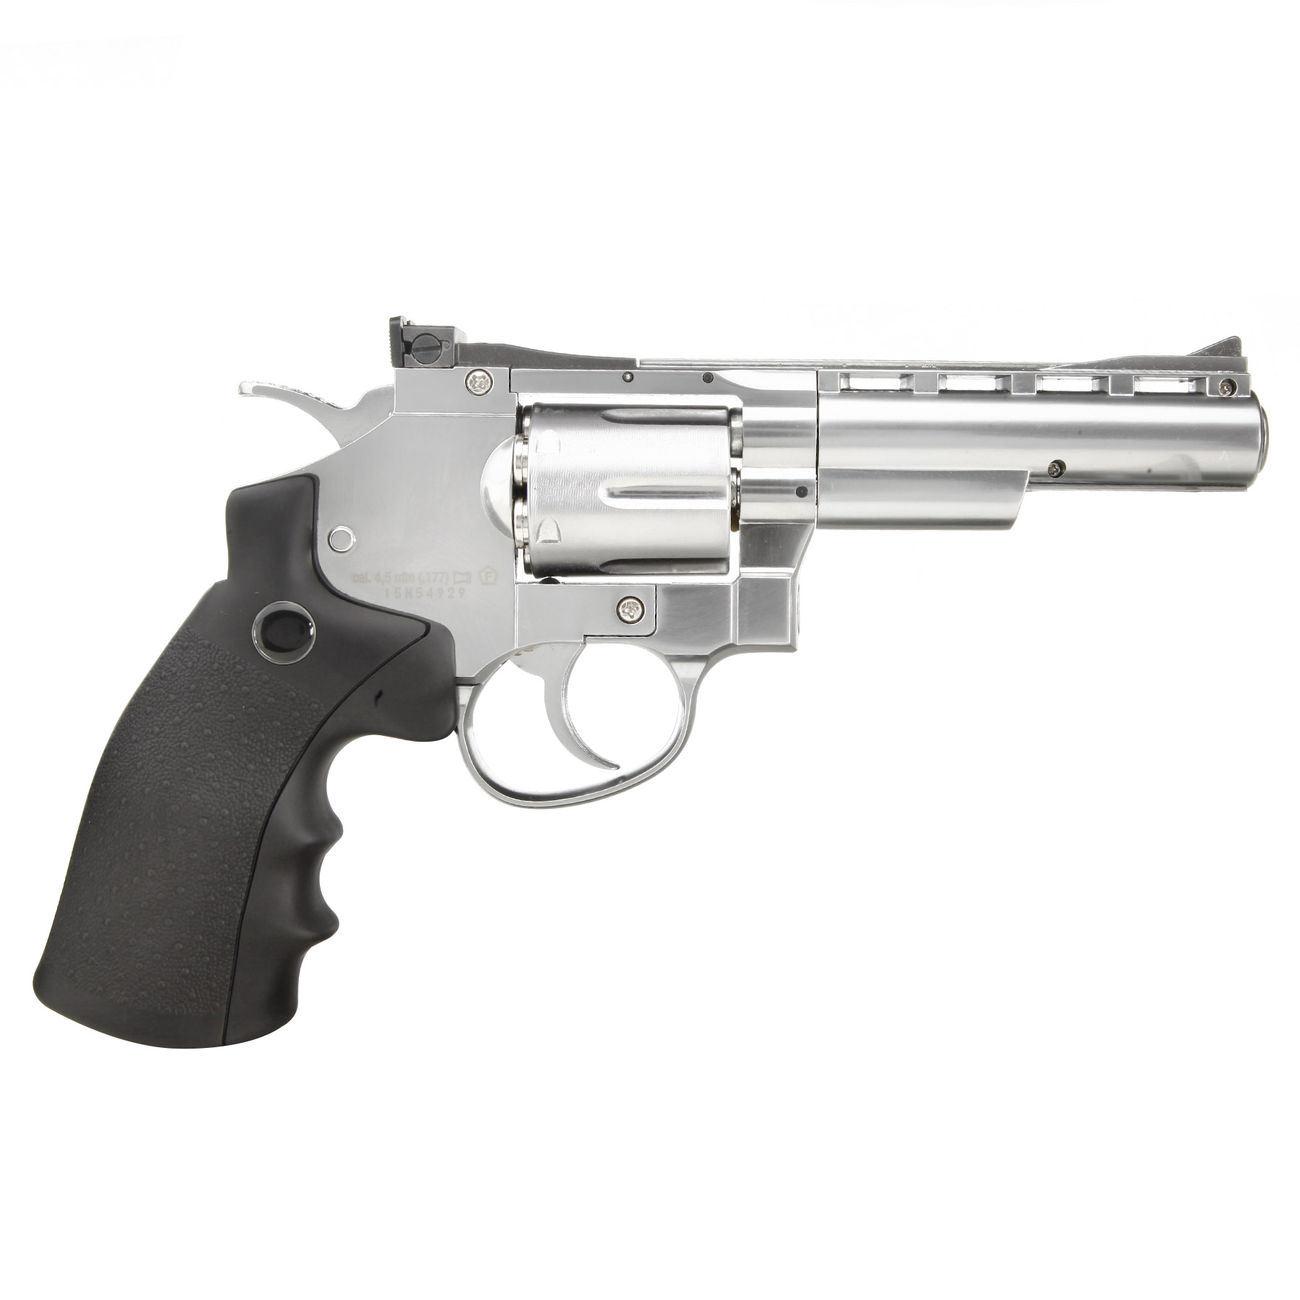 Legends S40 CO2 Revolver 4 Zoll Kal. 4,5mm Diabolo chrom Vollmetall Bild 1